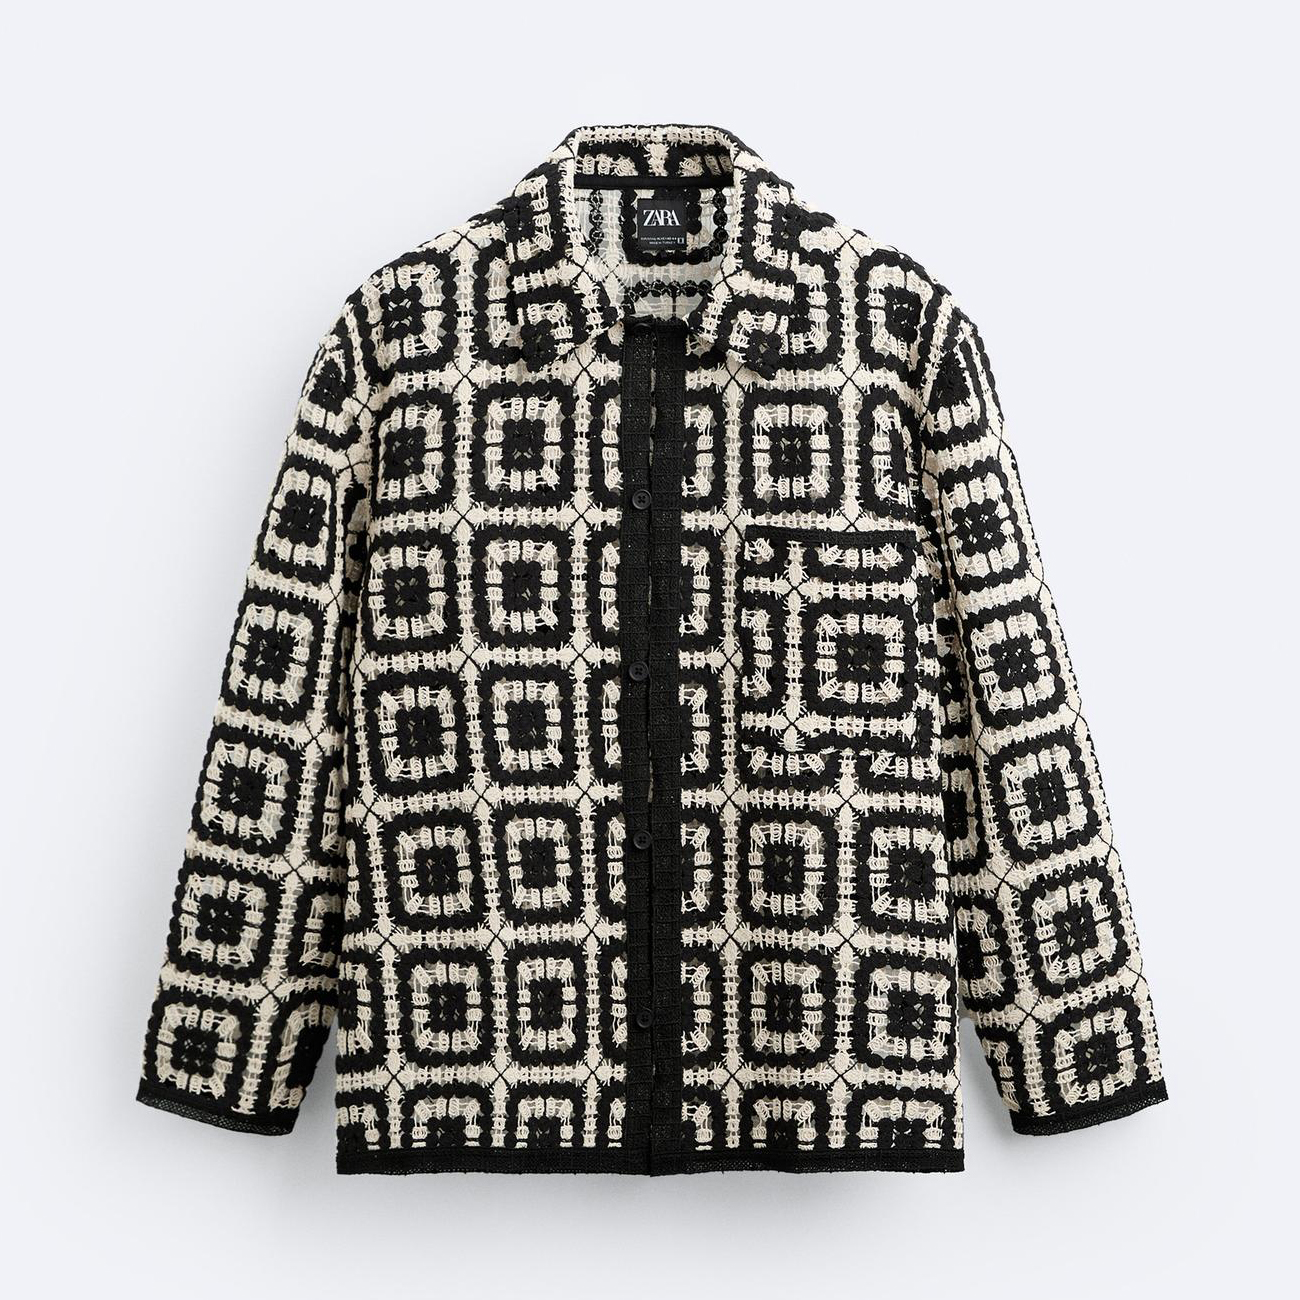 цена Кардиган Zara Crochet, черный/белый